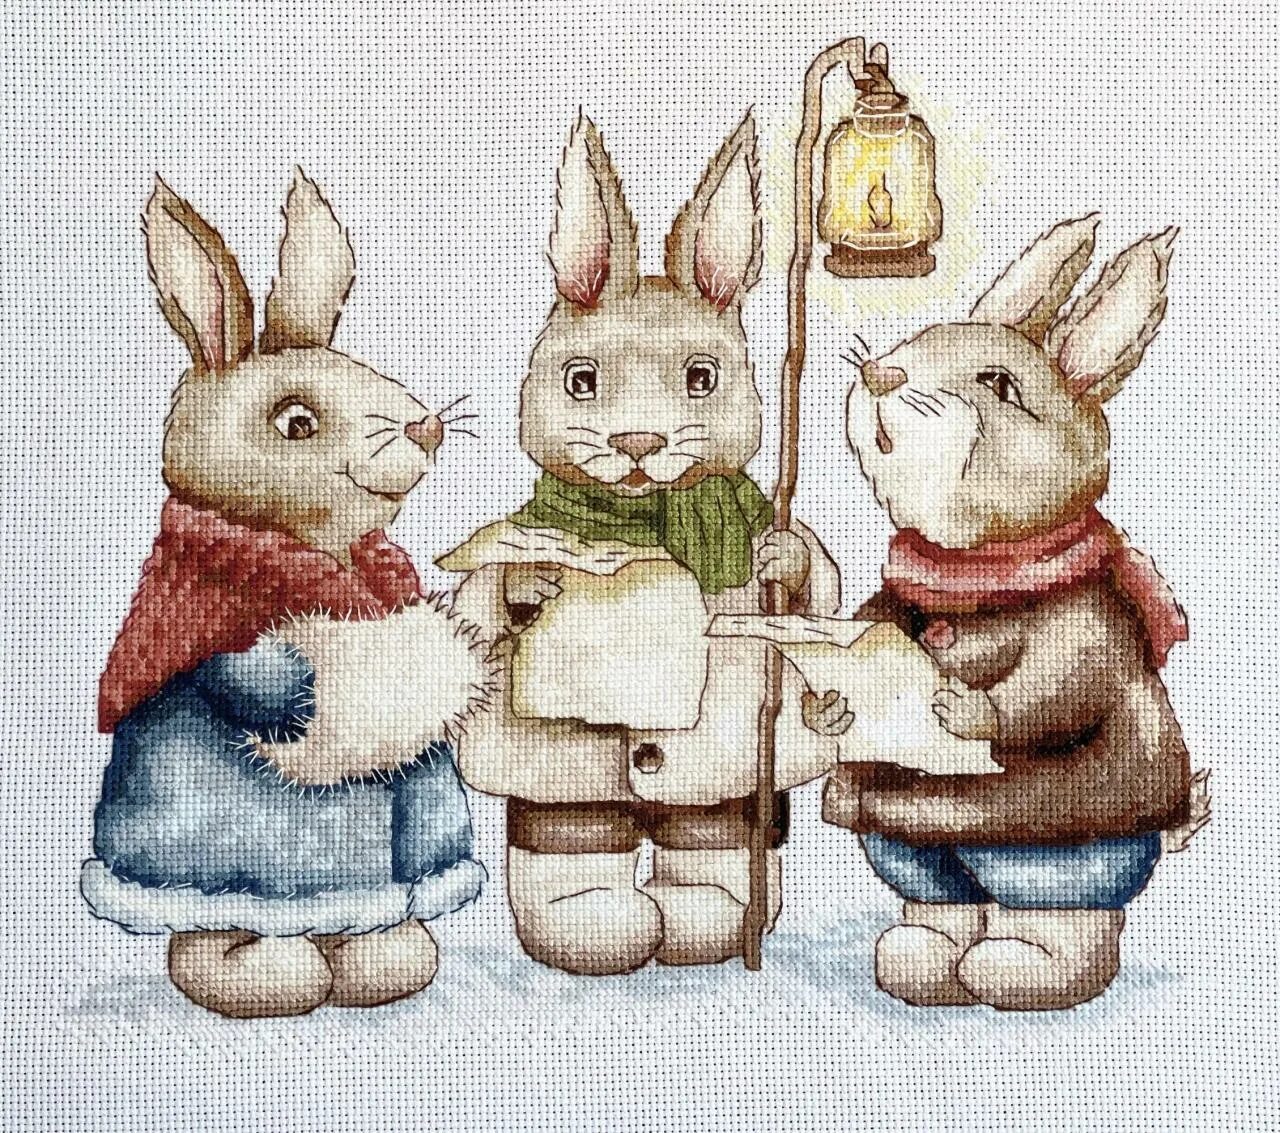 Rabbits sing